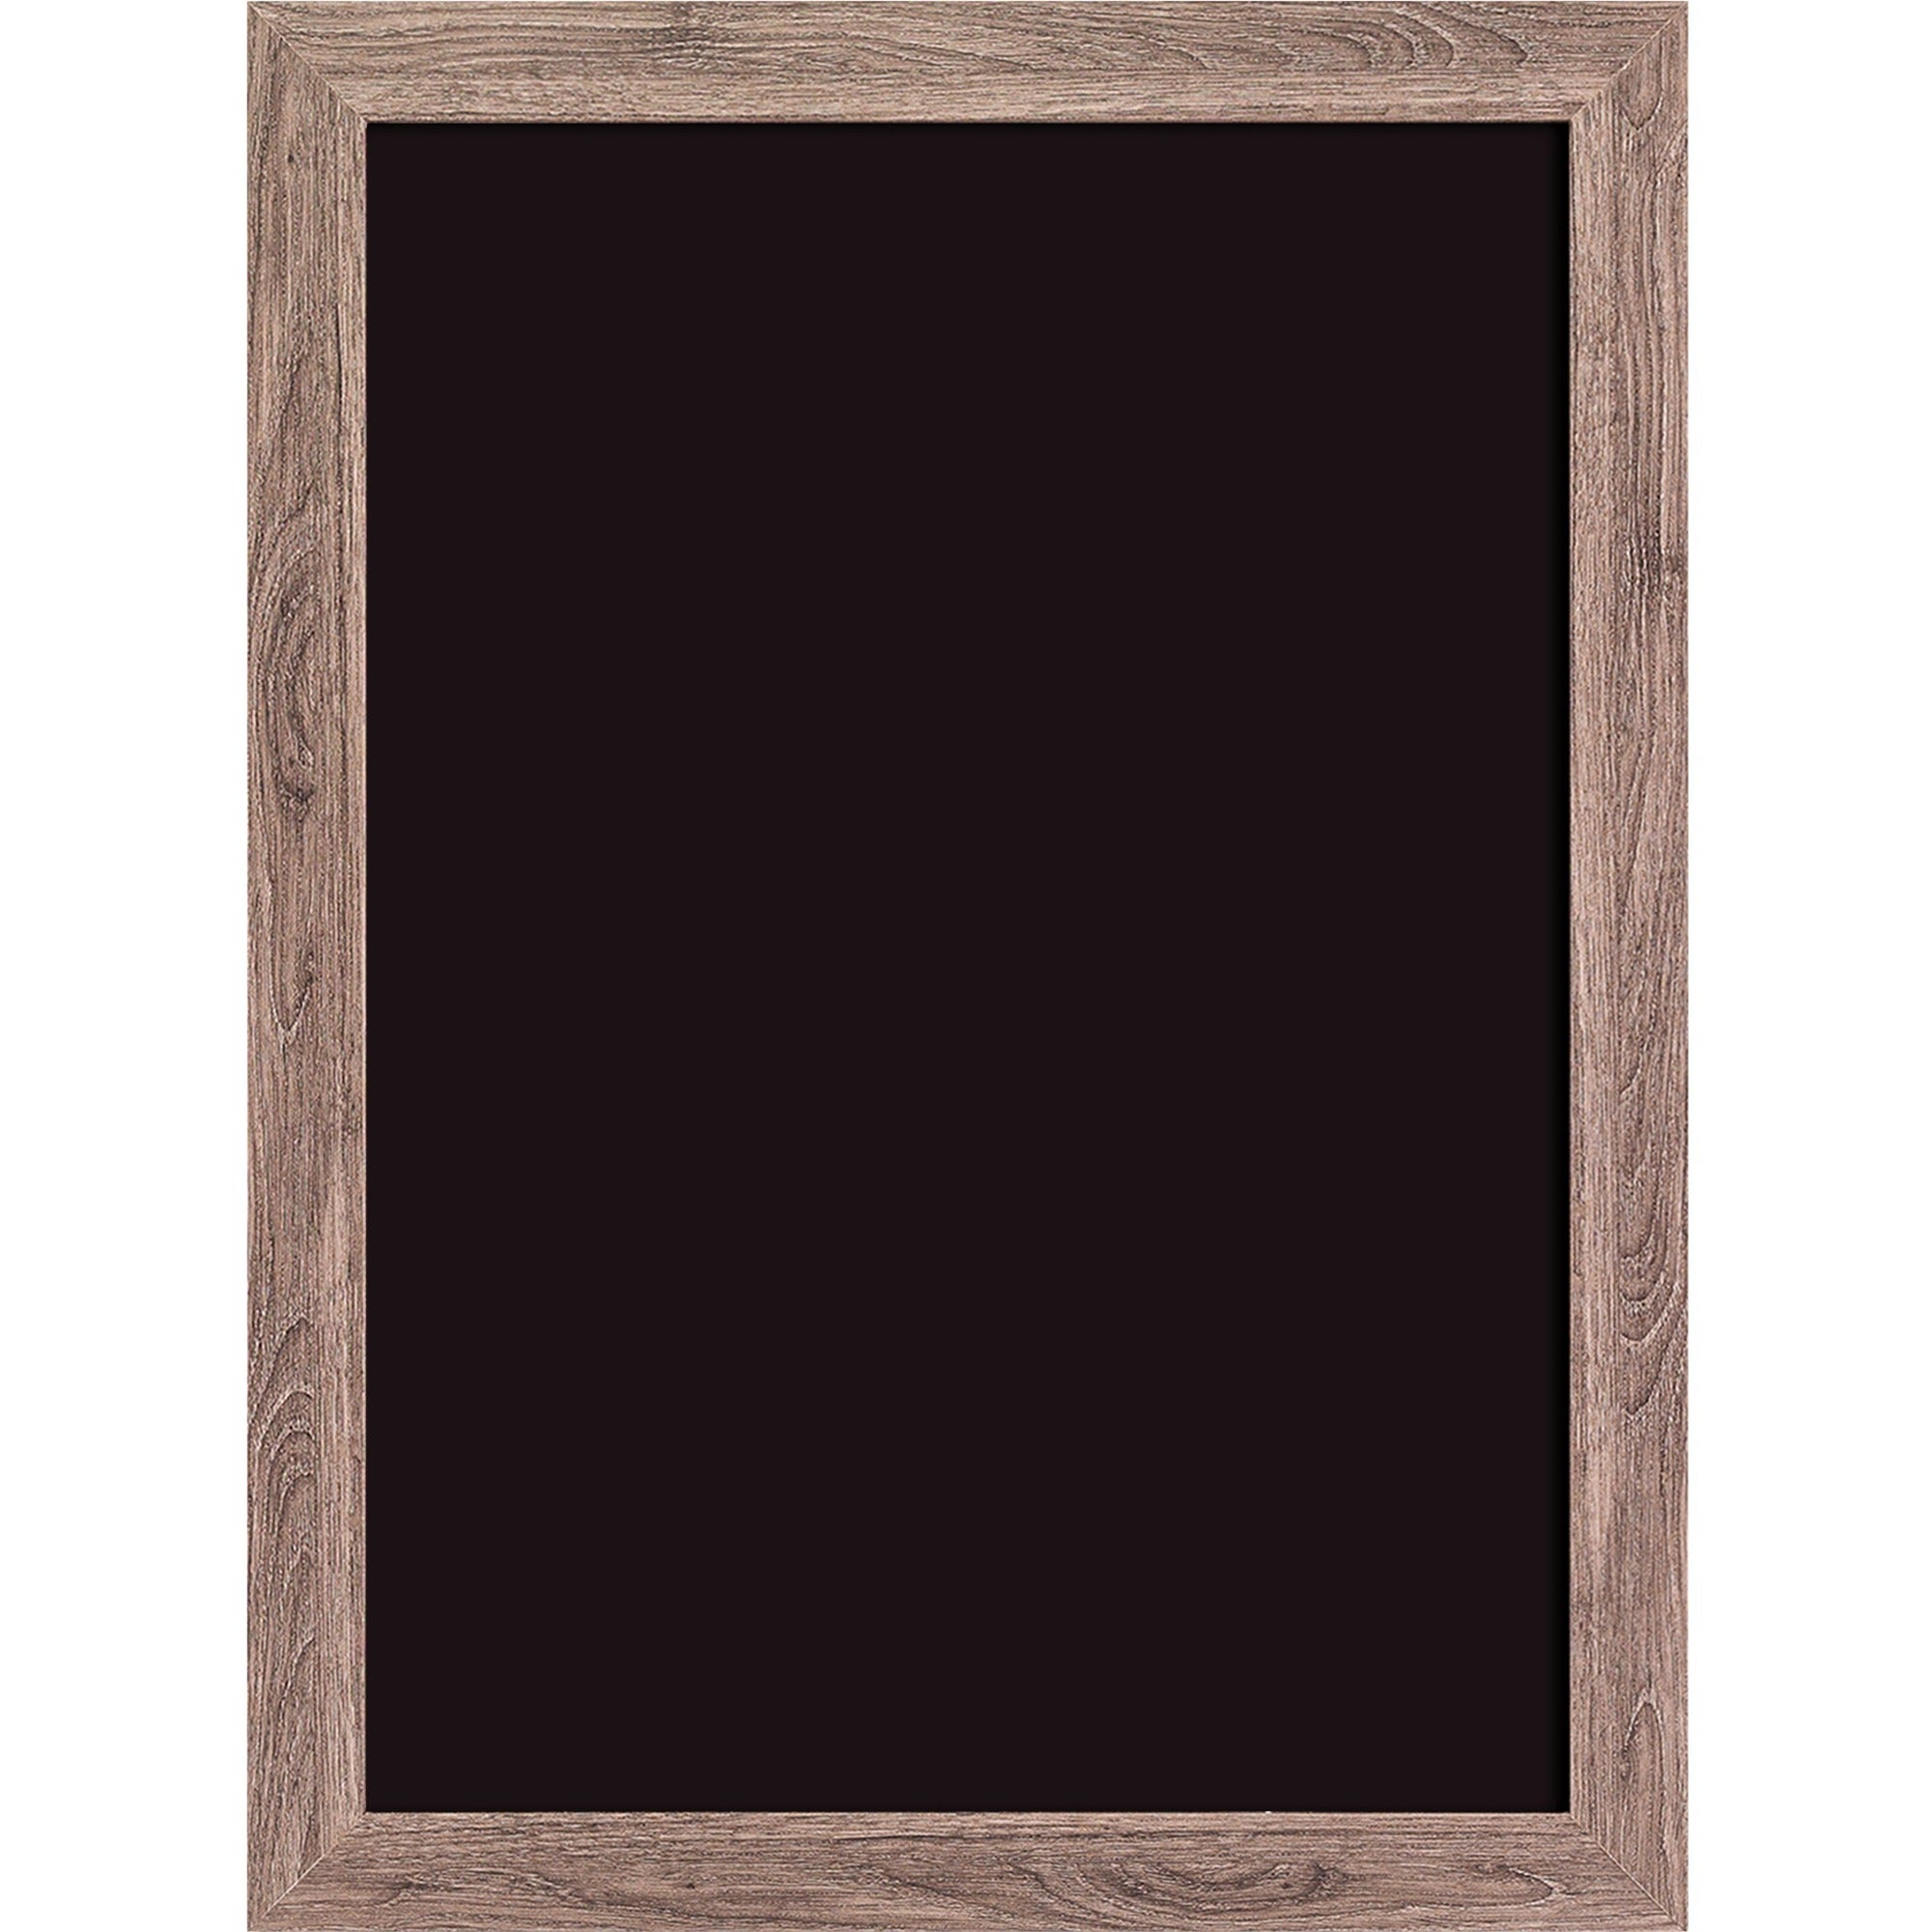 u-brands-decor-magnetic-chalkboard-23-width-x-17-height-rustic-wood-frame-horizontal-vertical-1-each_ubr4550u0001 - 1